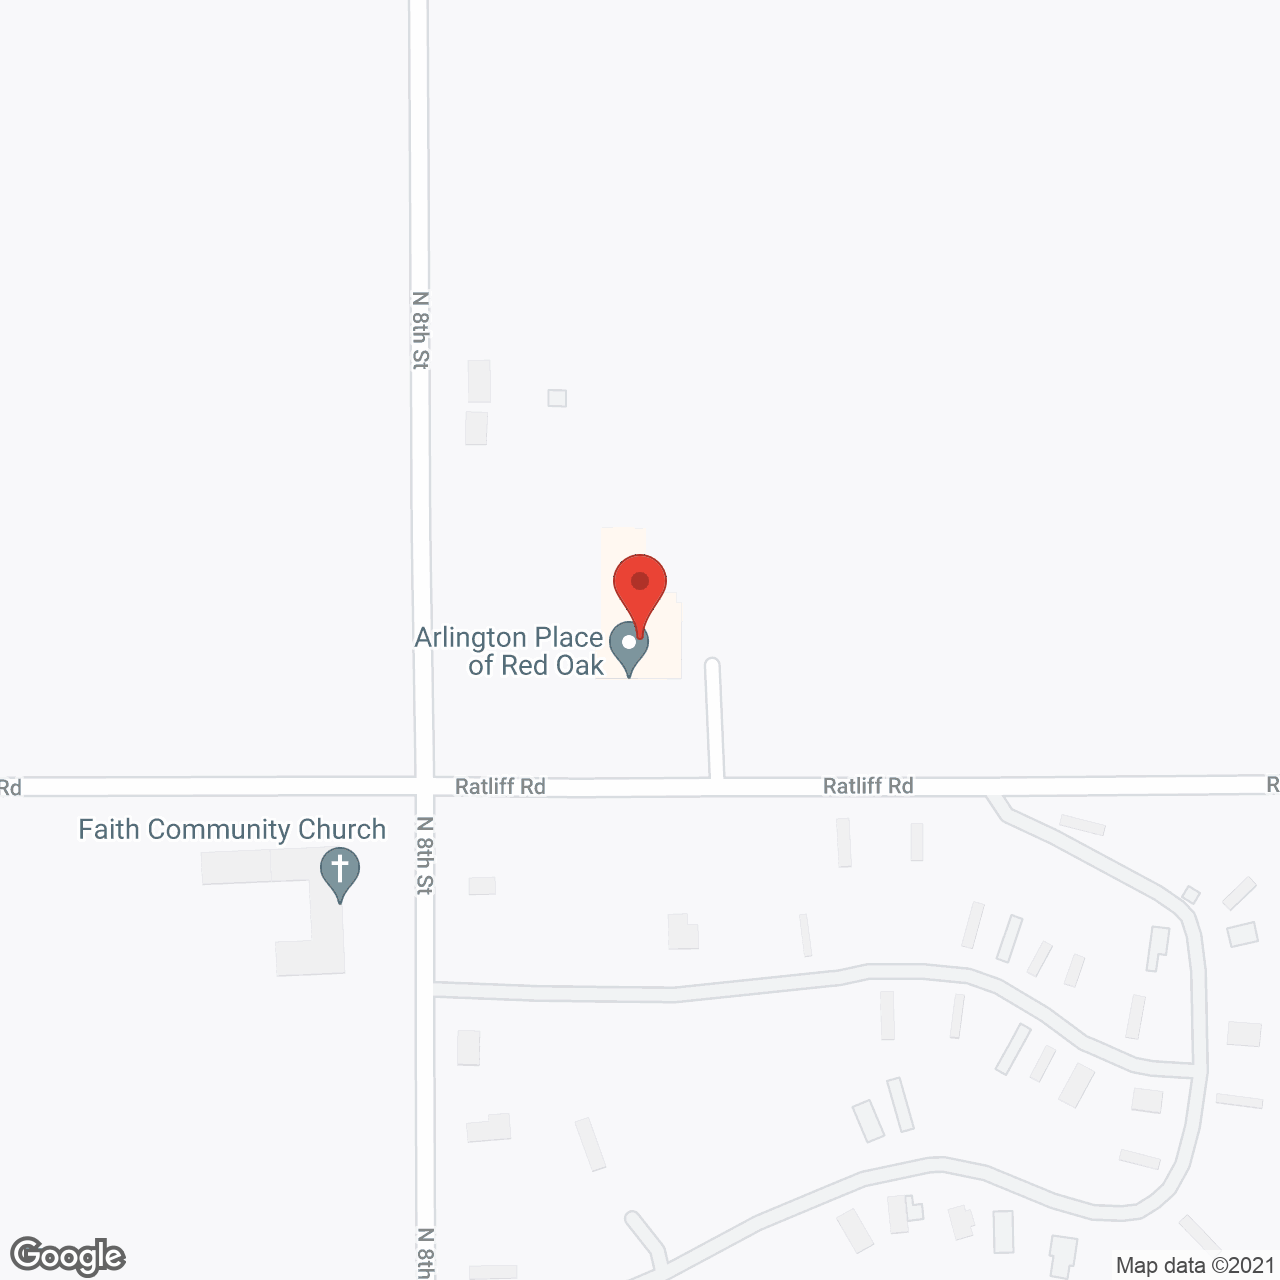 Arlington Place of Red Oak in google map